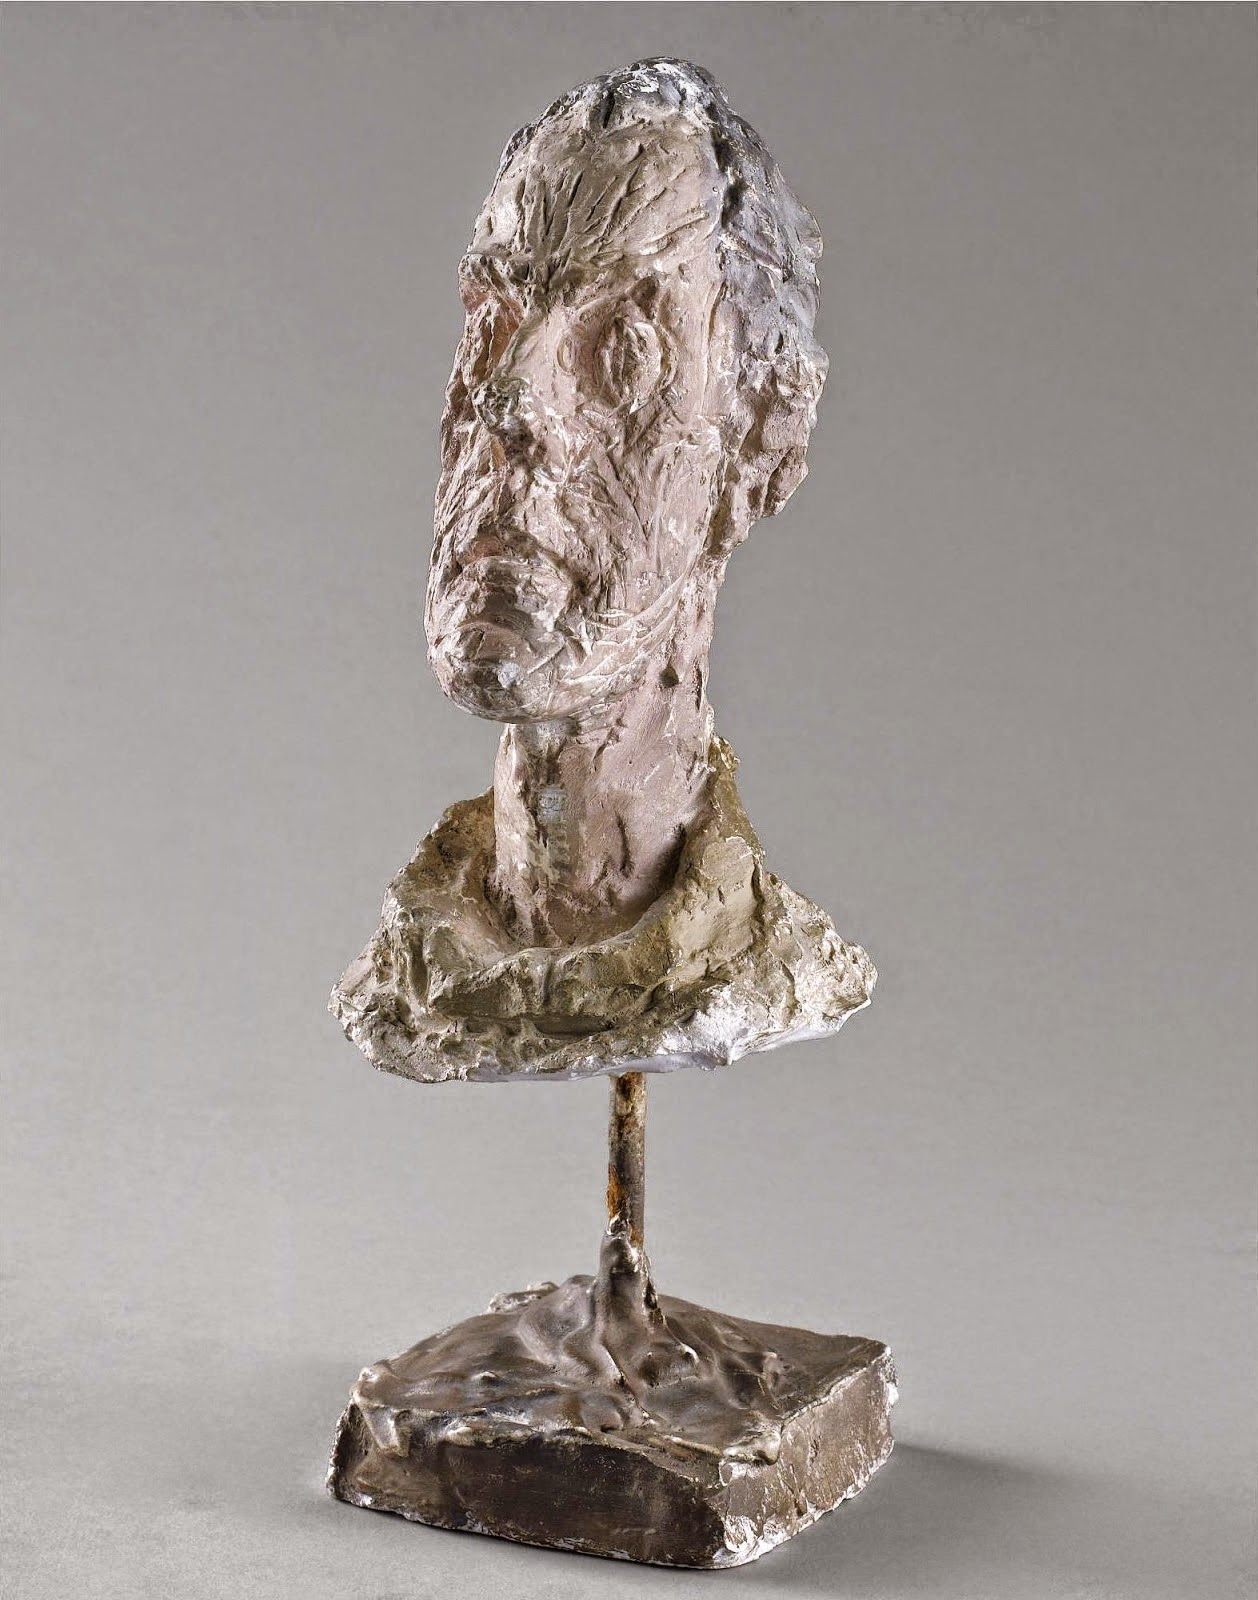 Alberto+Giacometti-1901-1966 (66).jpg